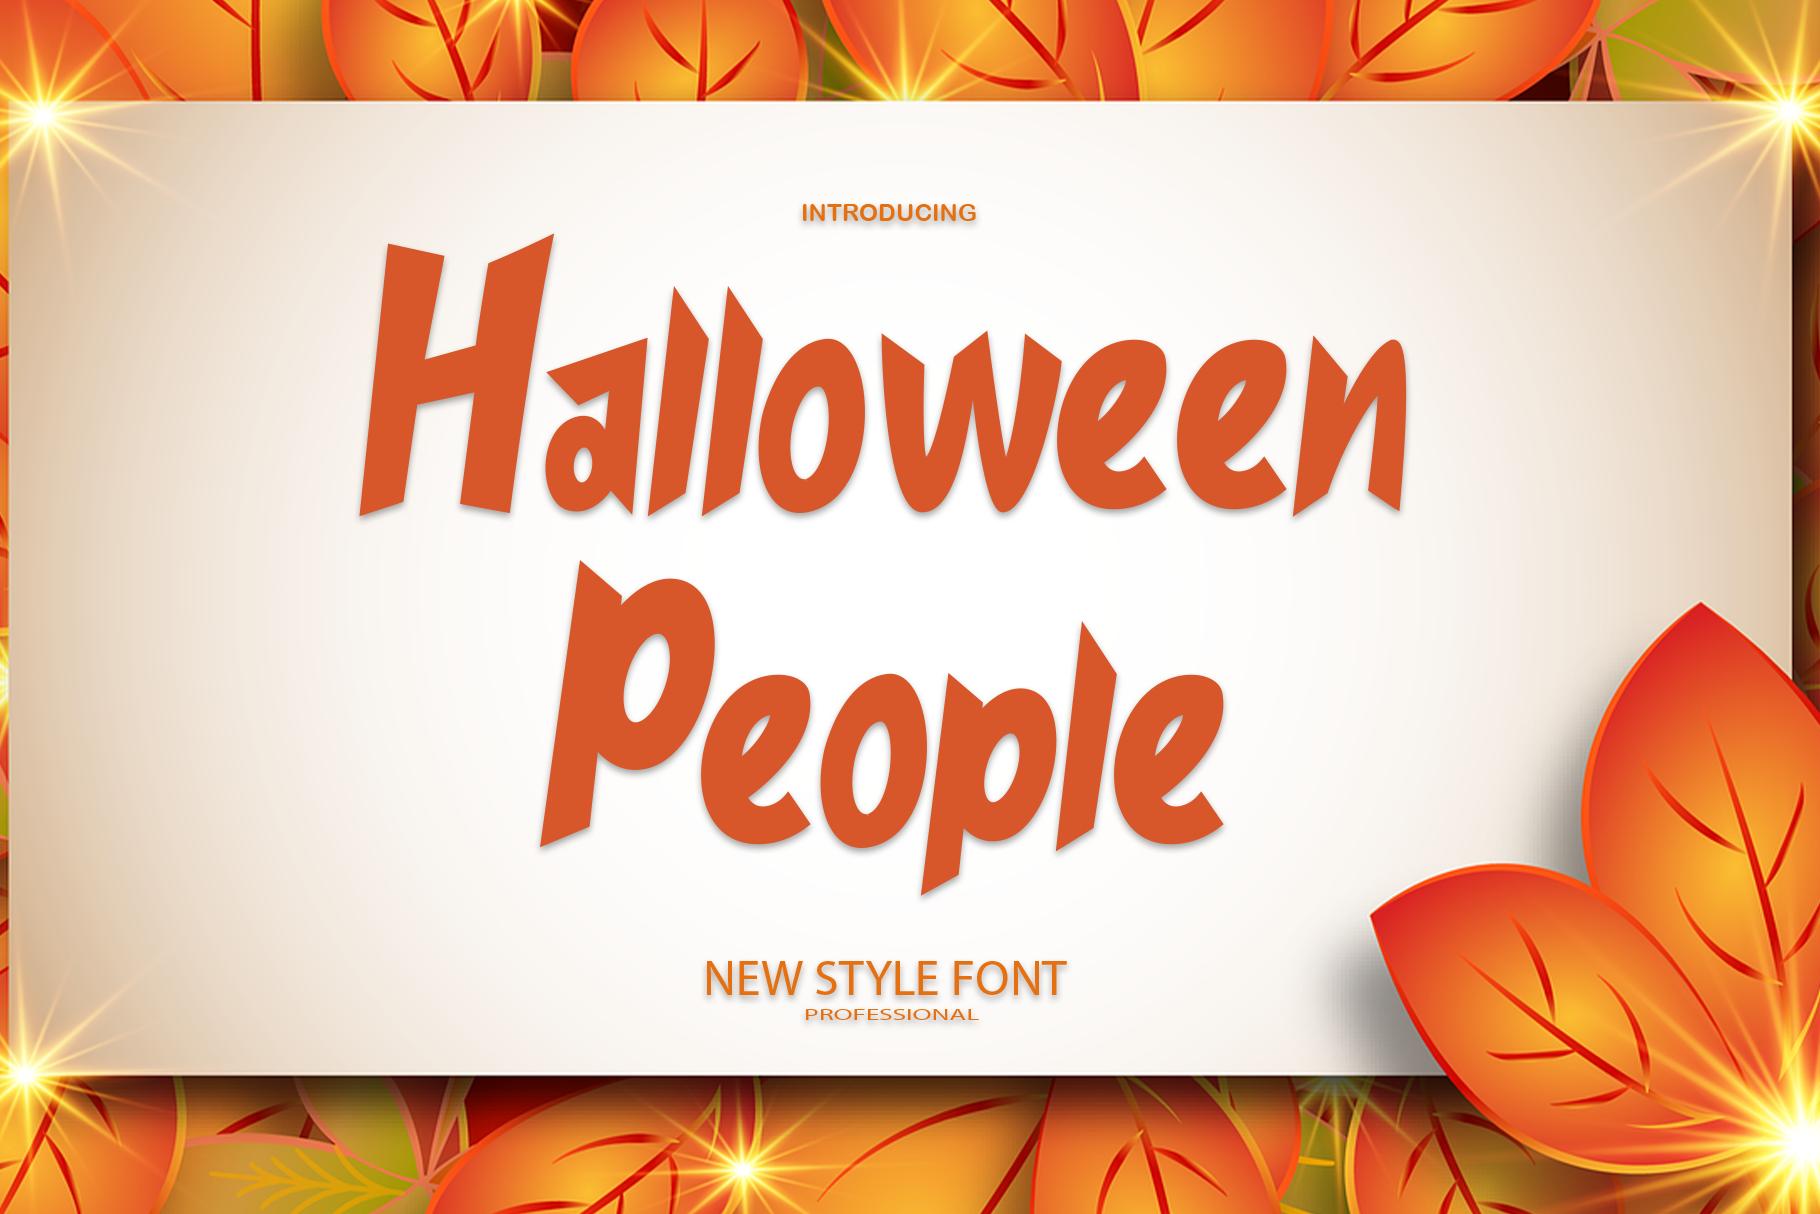 Halloween People Font